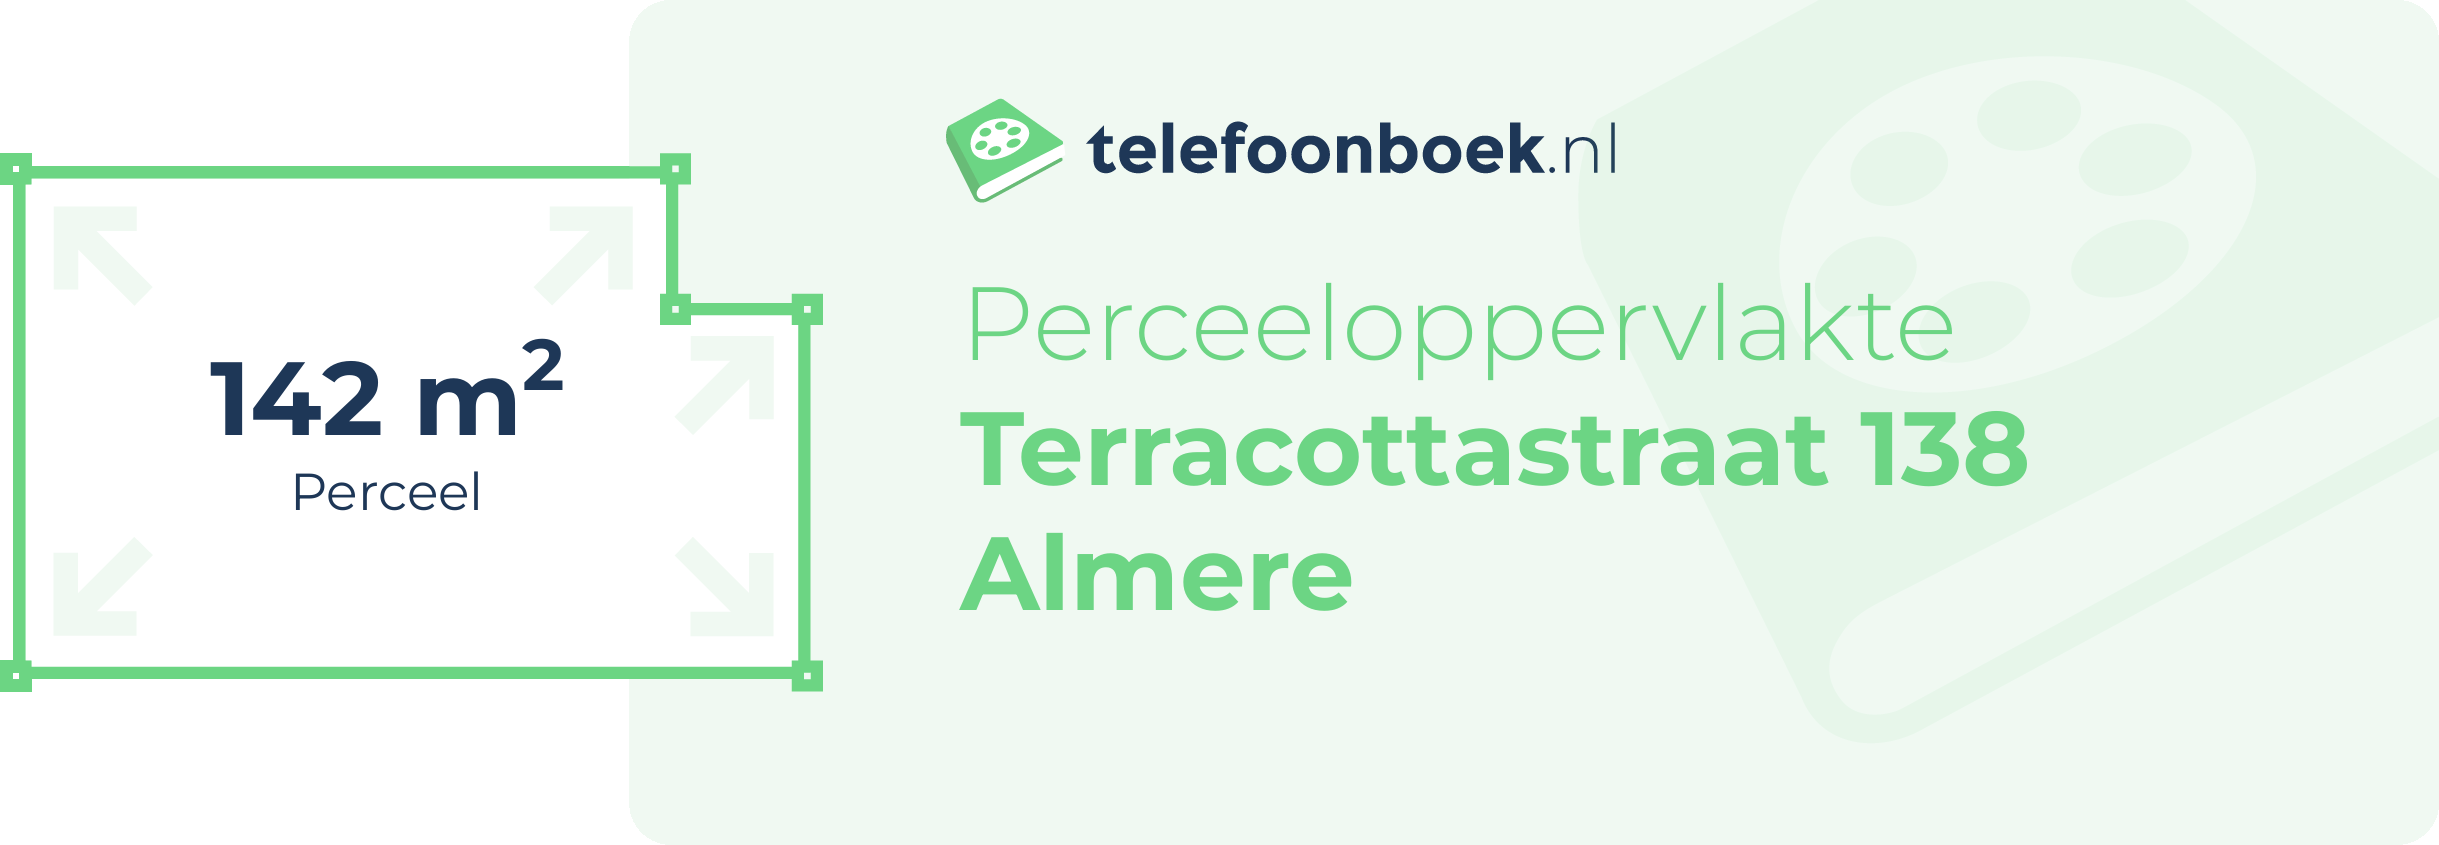 Perceeloppervlakte Terracottastraat 138 Almere